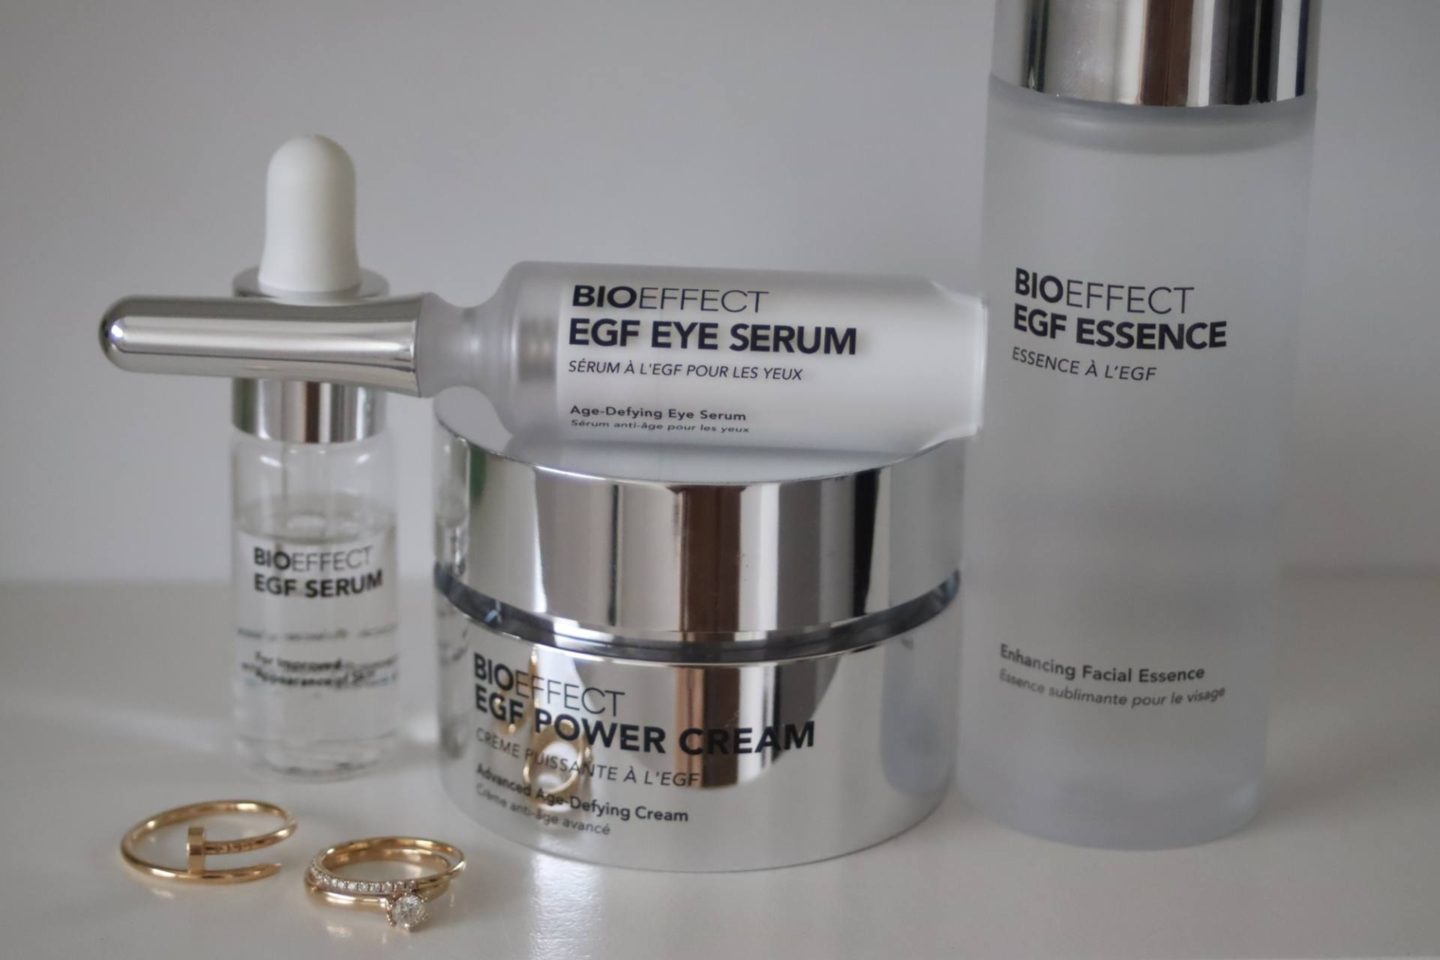 glamupyourlifestyle beauty-entdeckung EGF-Serum Bioeffect trockene-Haut zellerneuerung ue-50-blog 